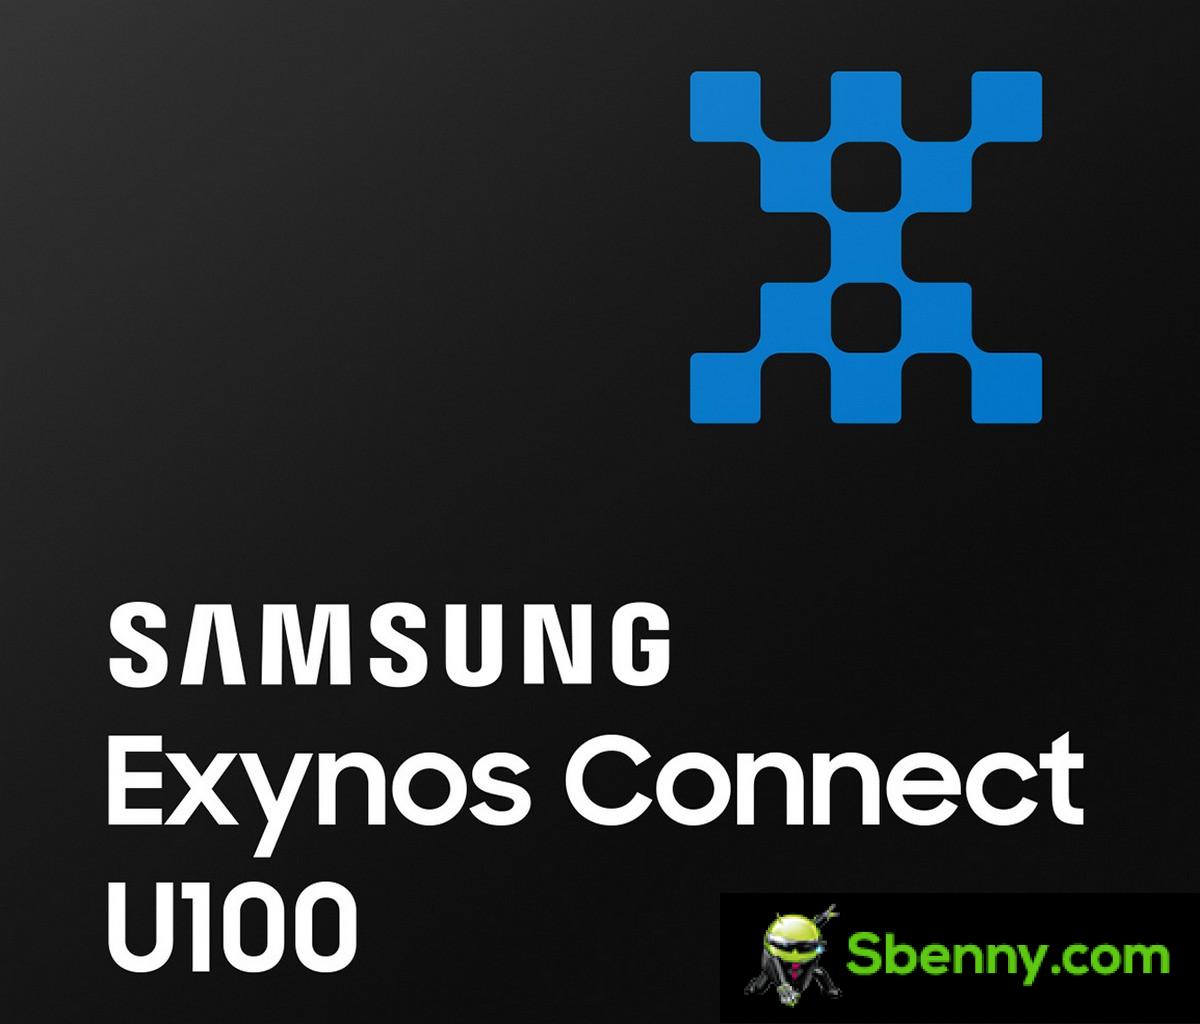 Samsung unveils Exynos Connect U100, its ultra-broadband chipset